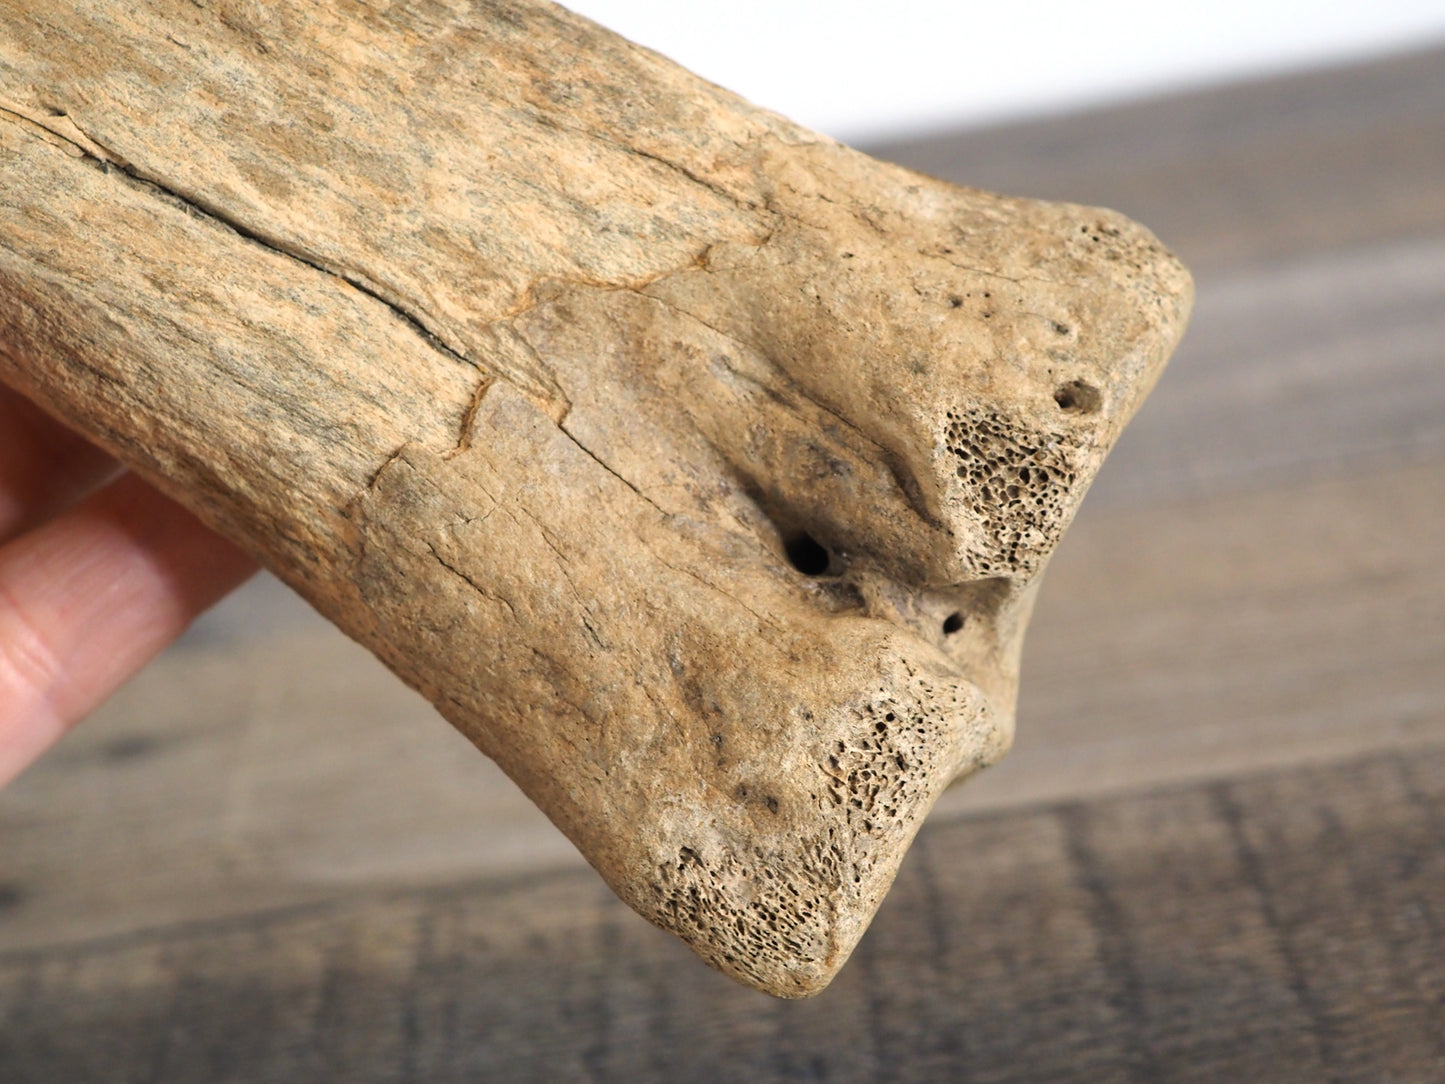 Pleistocene (Ice Age) Bison Lower Leg Bone Fossil